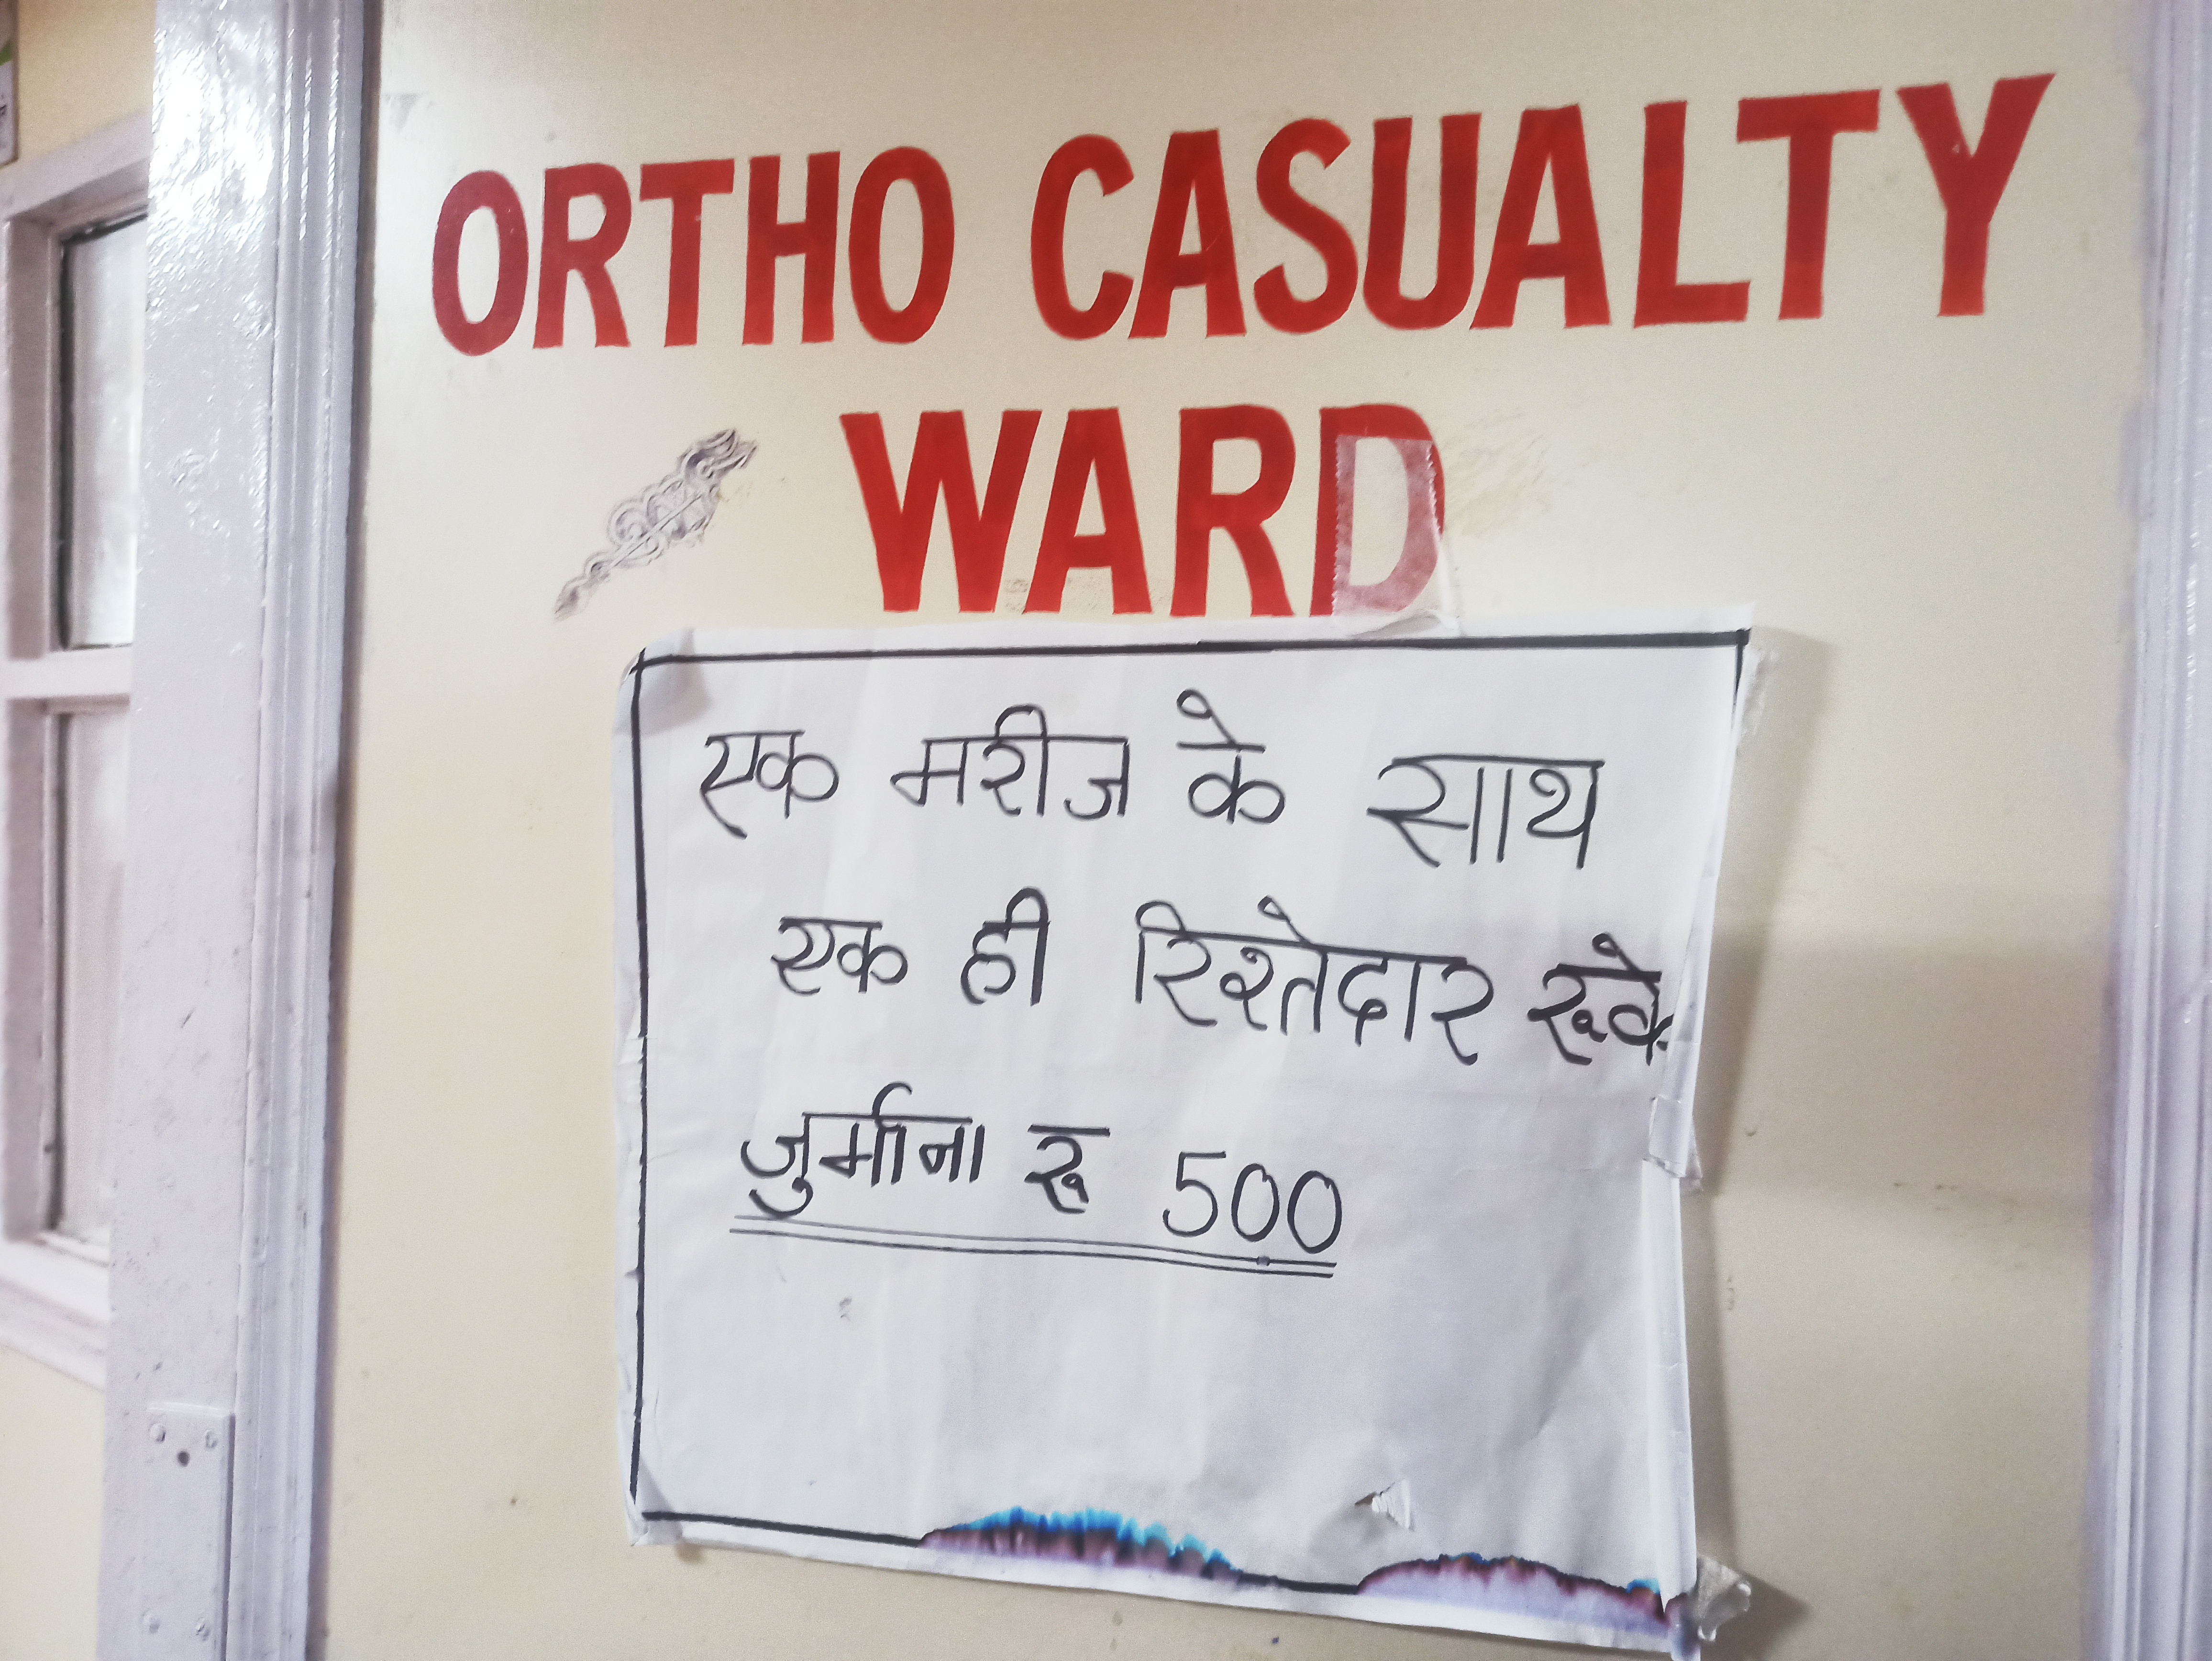 IGMC Shimla new rules for emergency wards